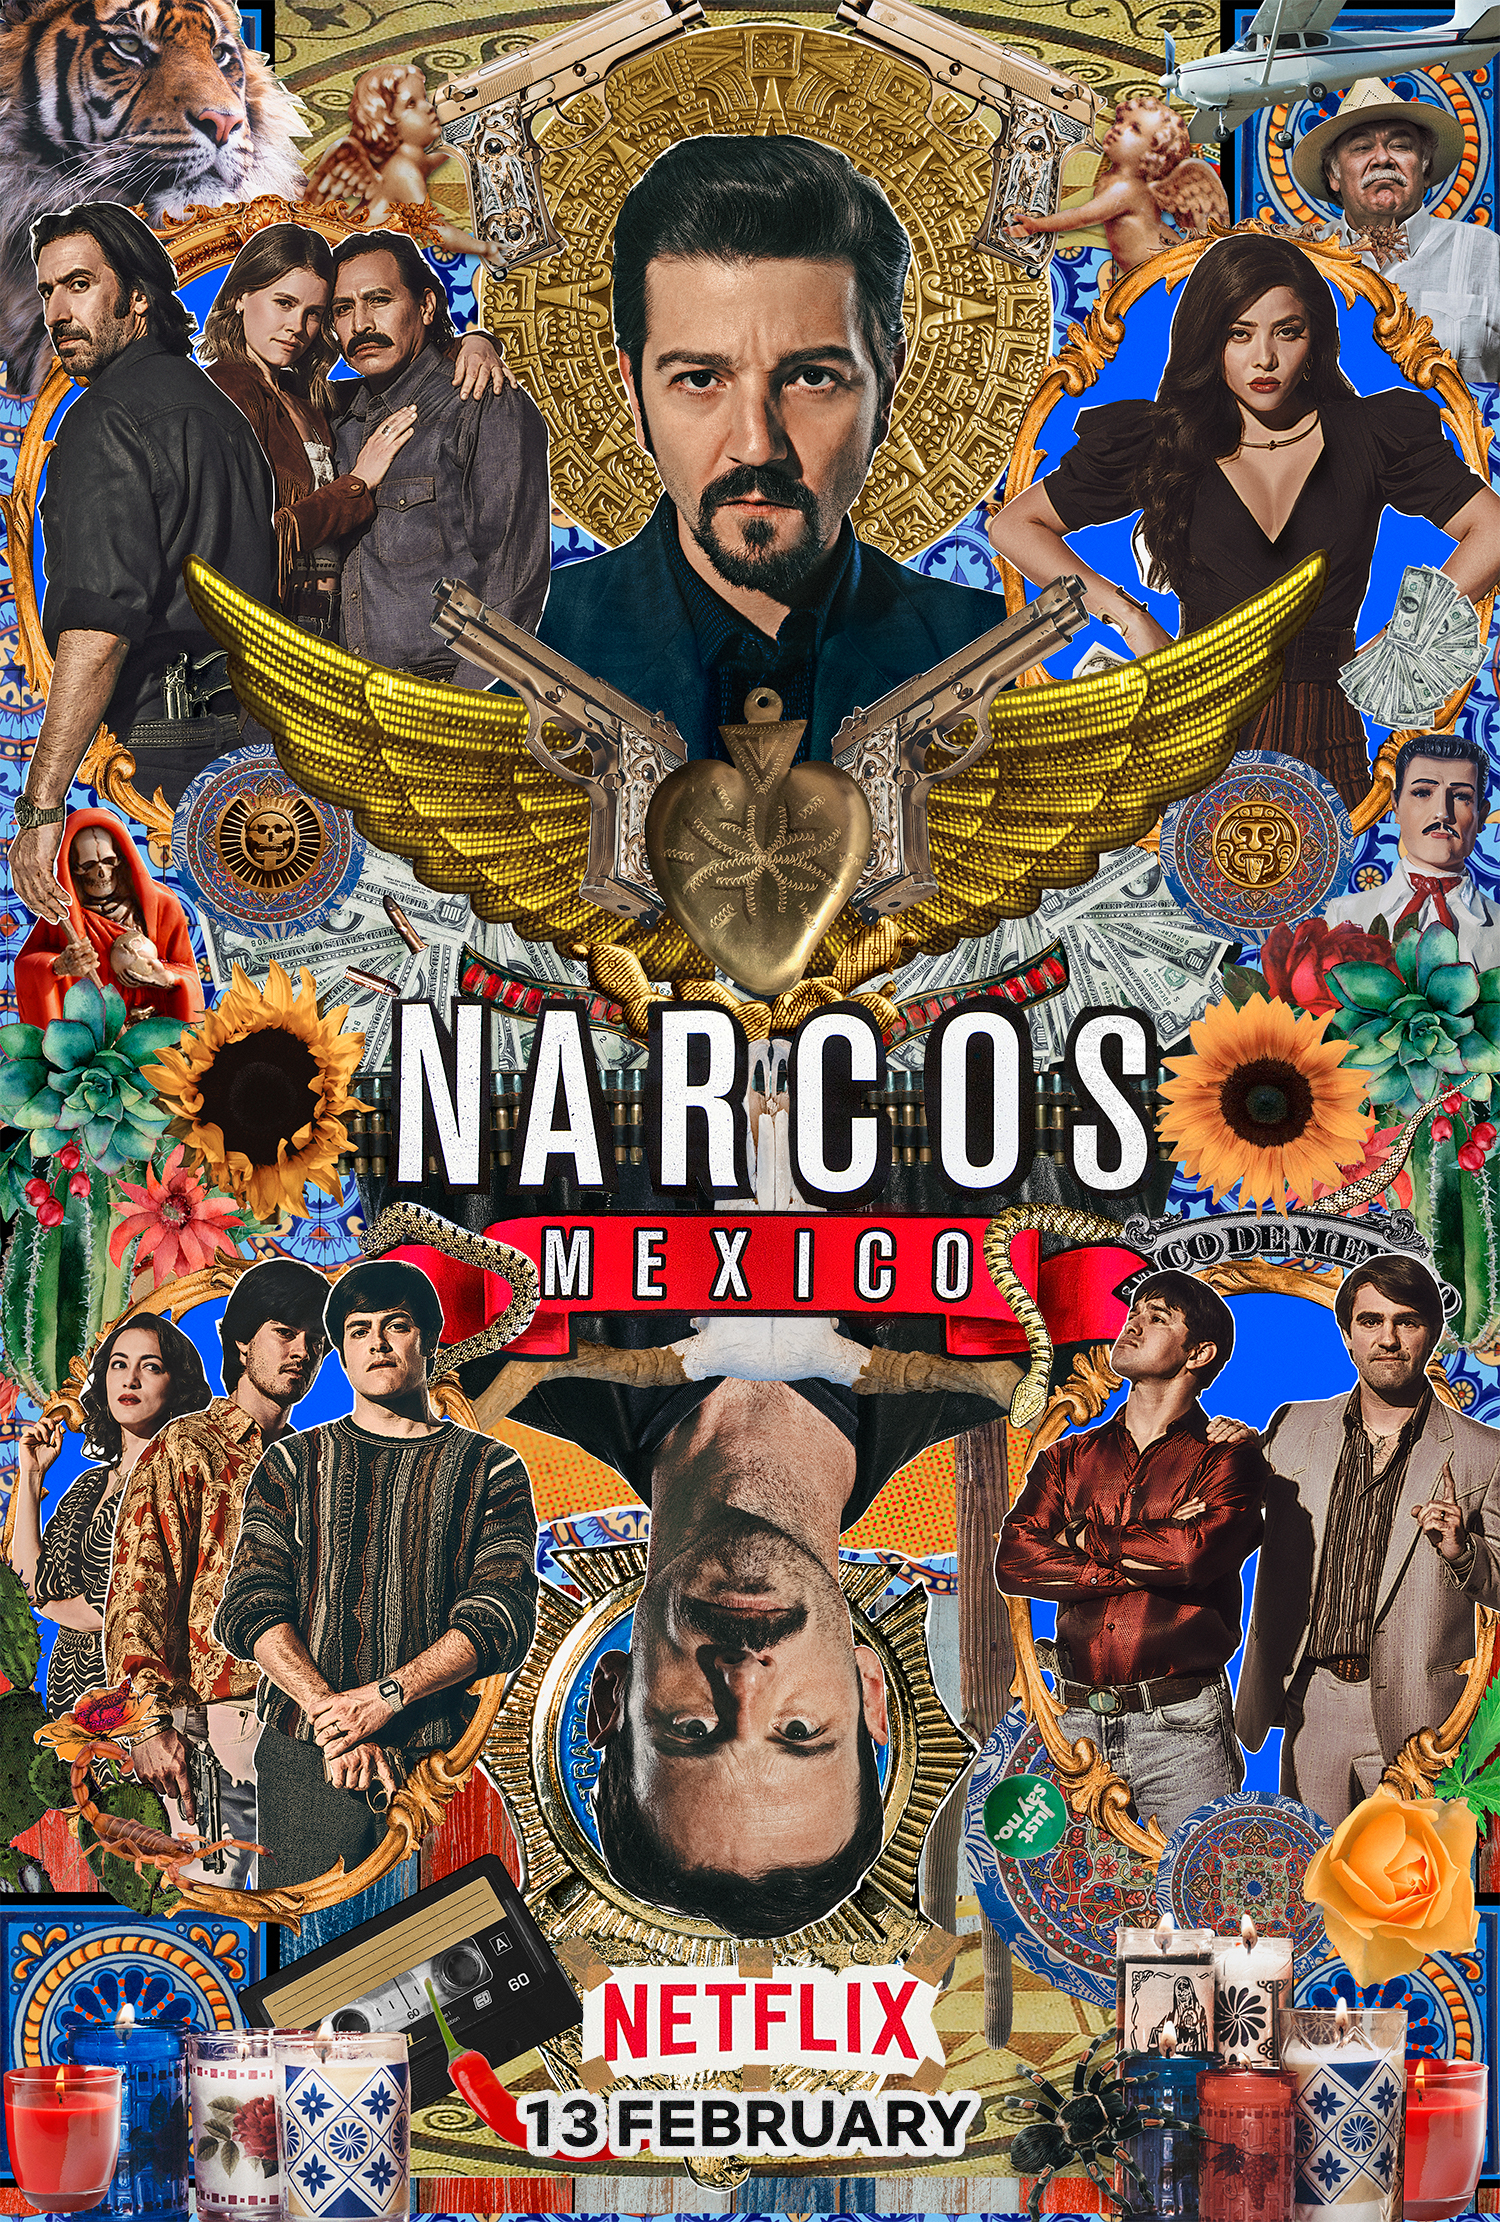 Stiahni si Seriál Narcos: Mexiko / Narcos: Mexico S02E04 (CZ)[TvRip][1080p][HEVC] = CSFD 86%